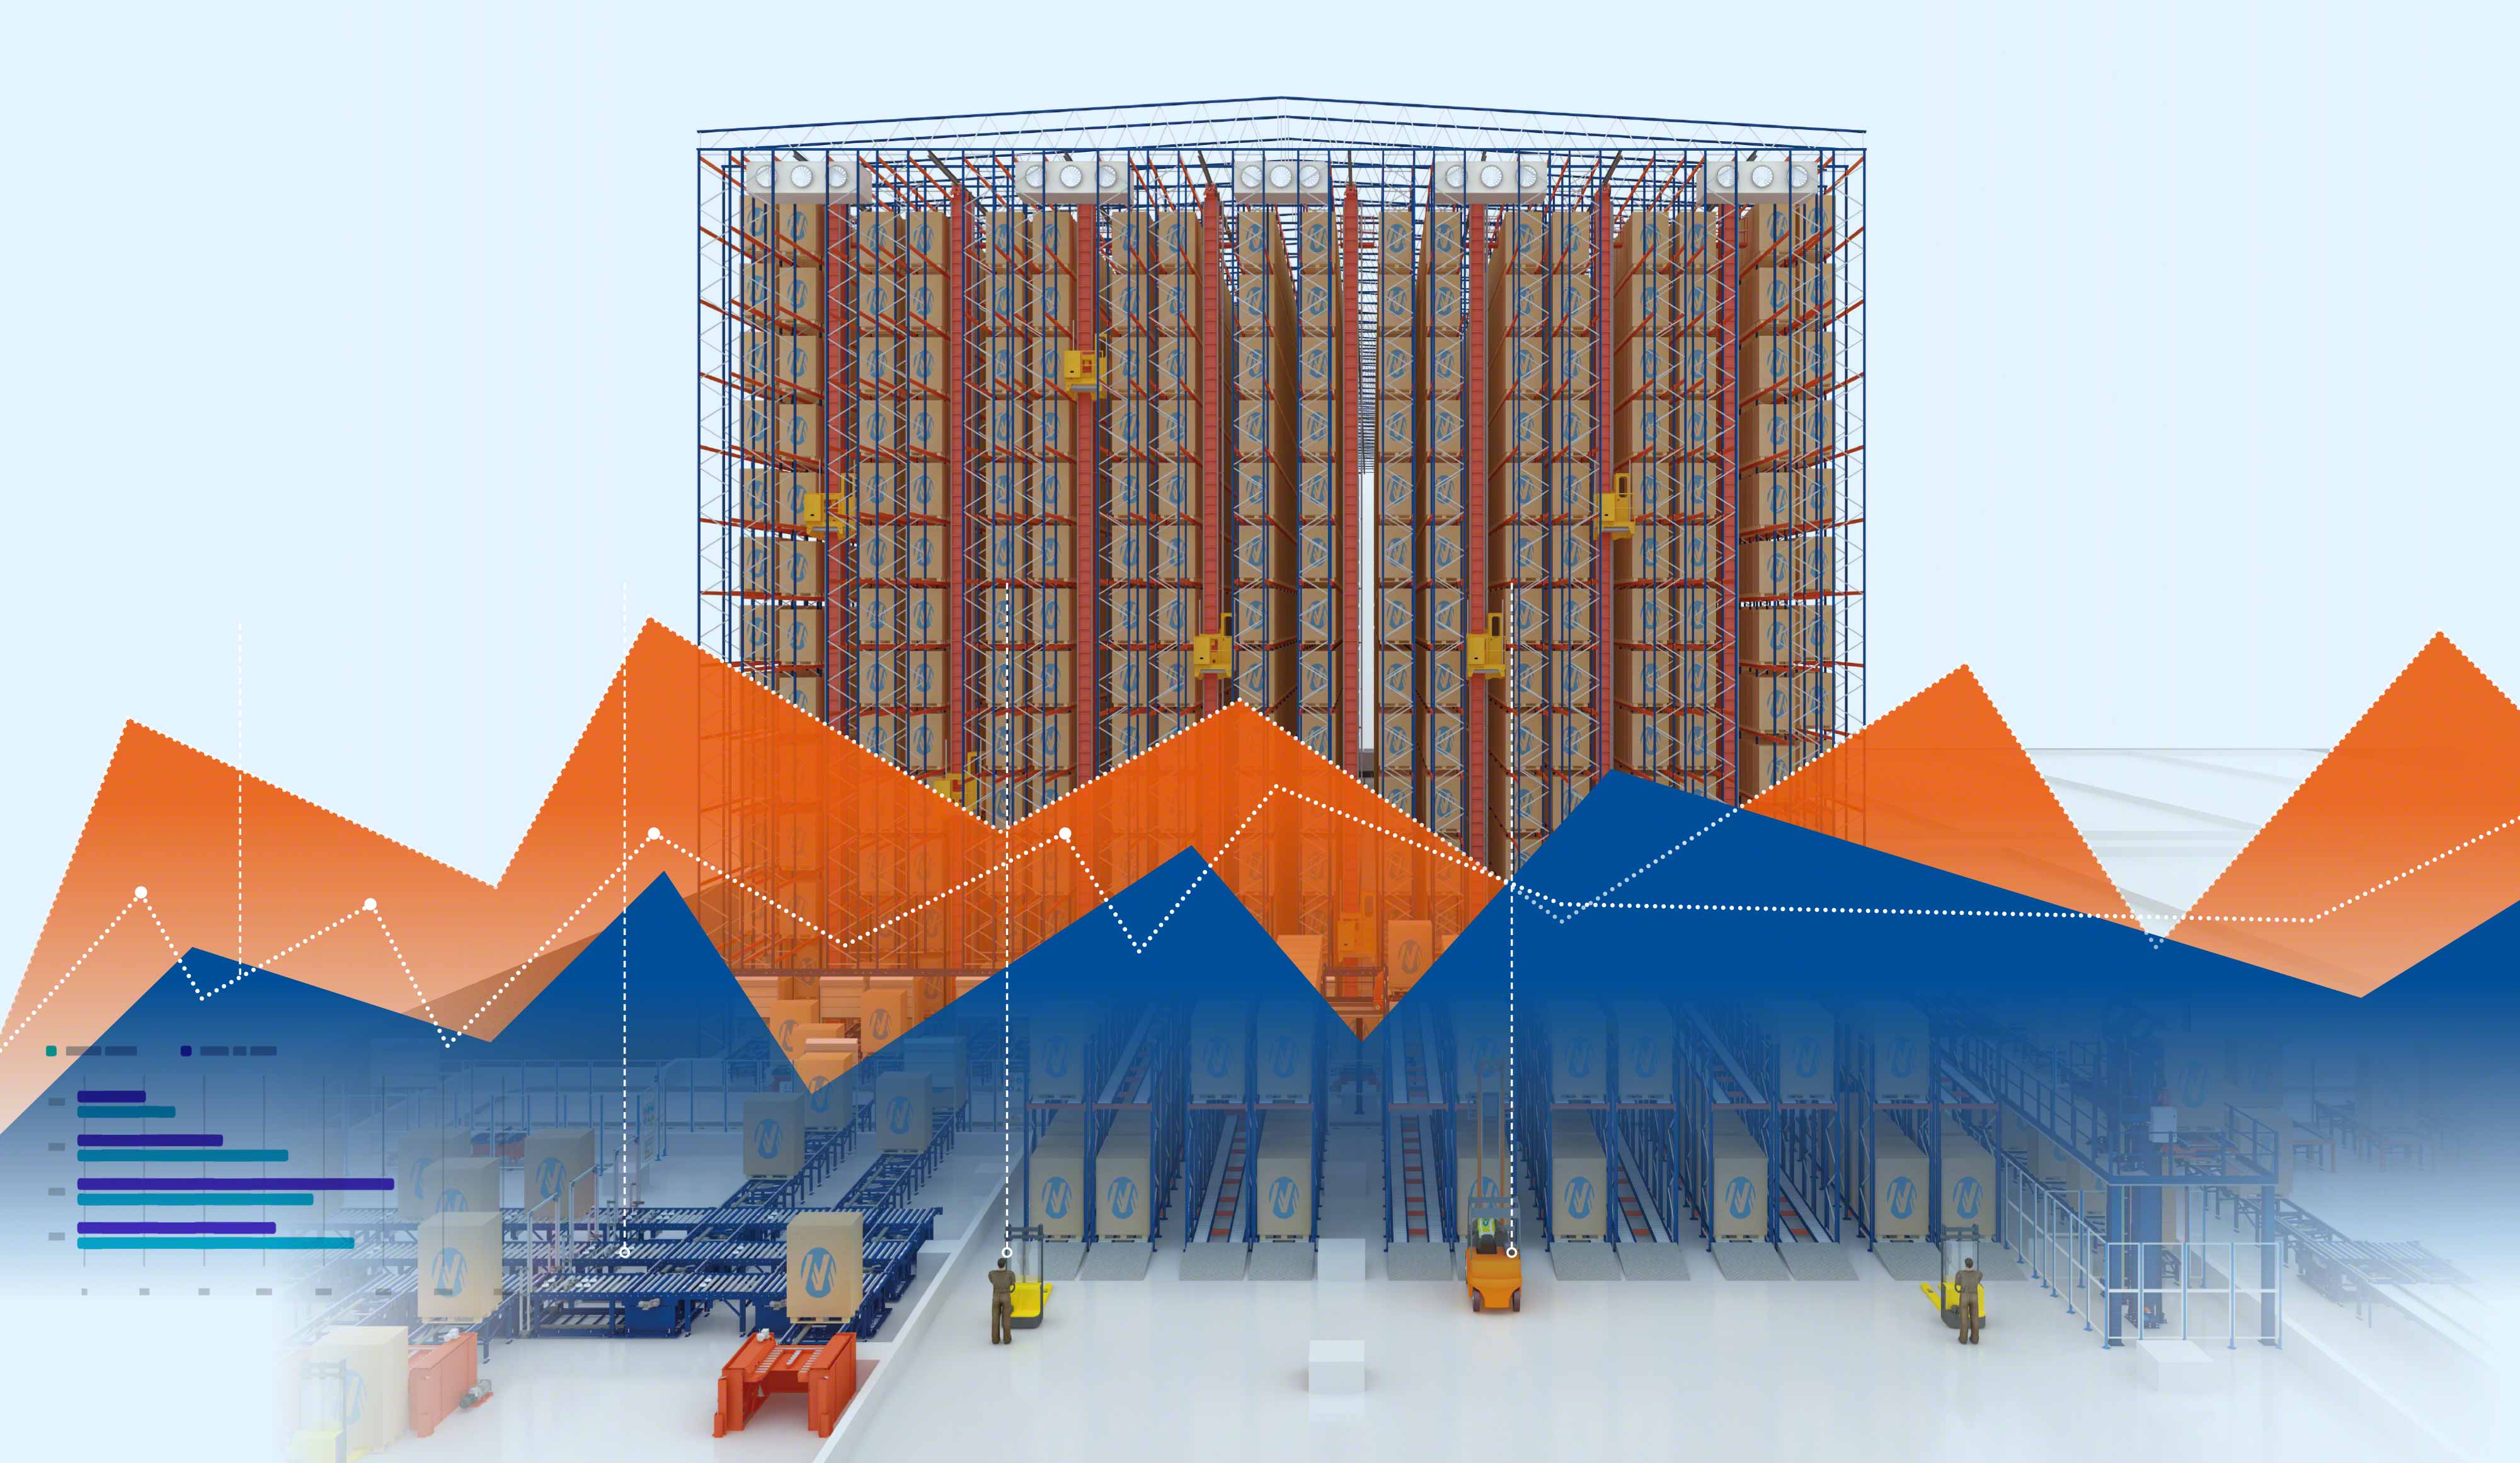 Mecalux applies predictive analytics to warehouses